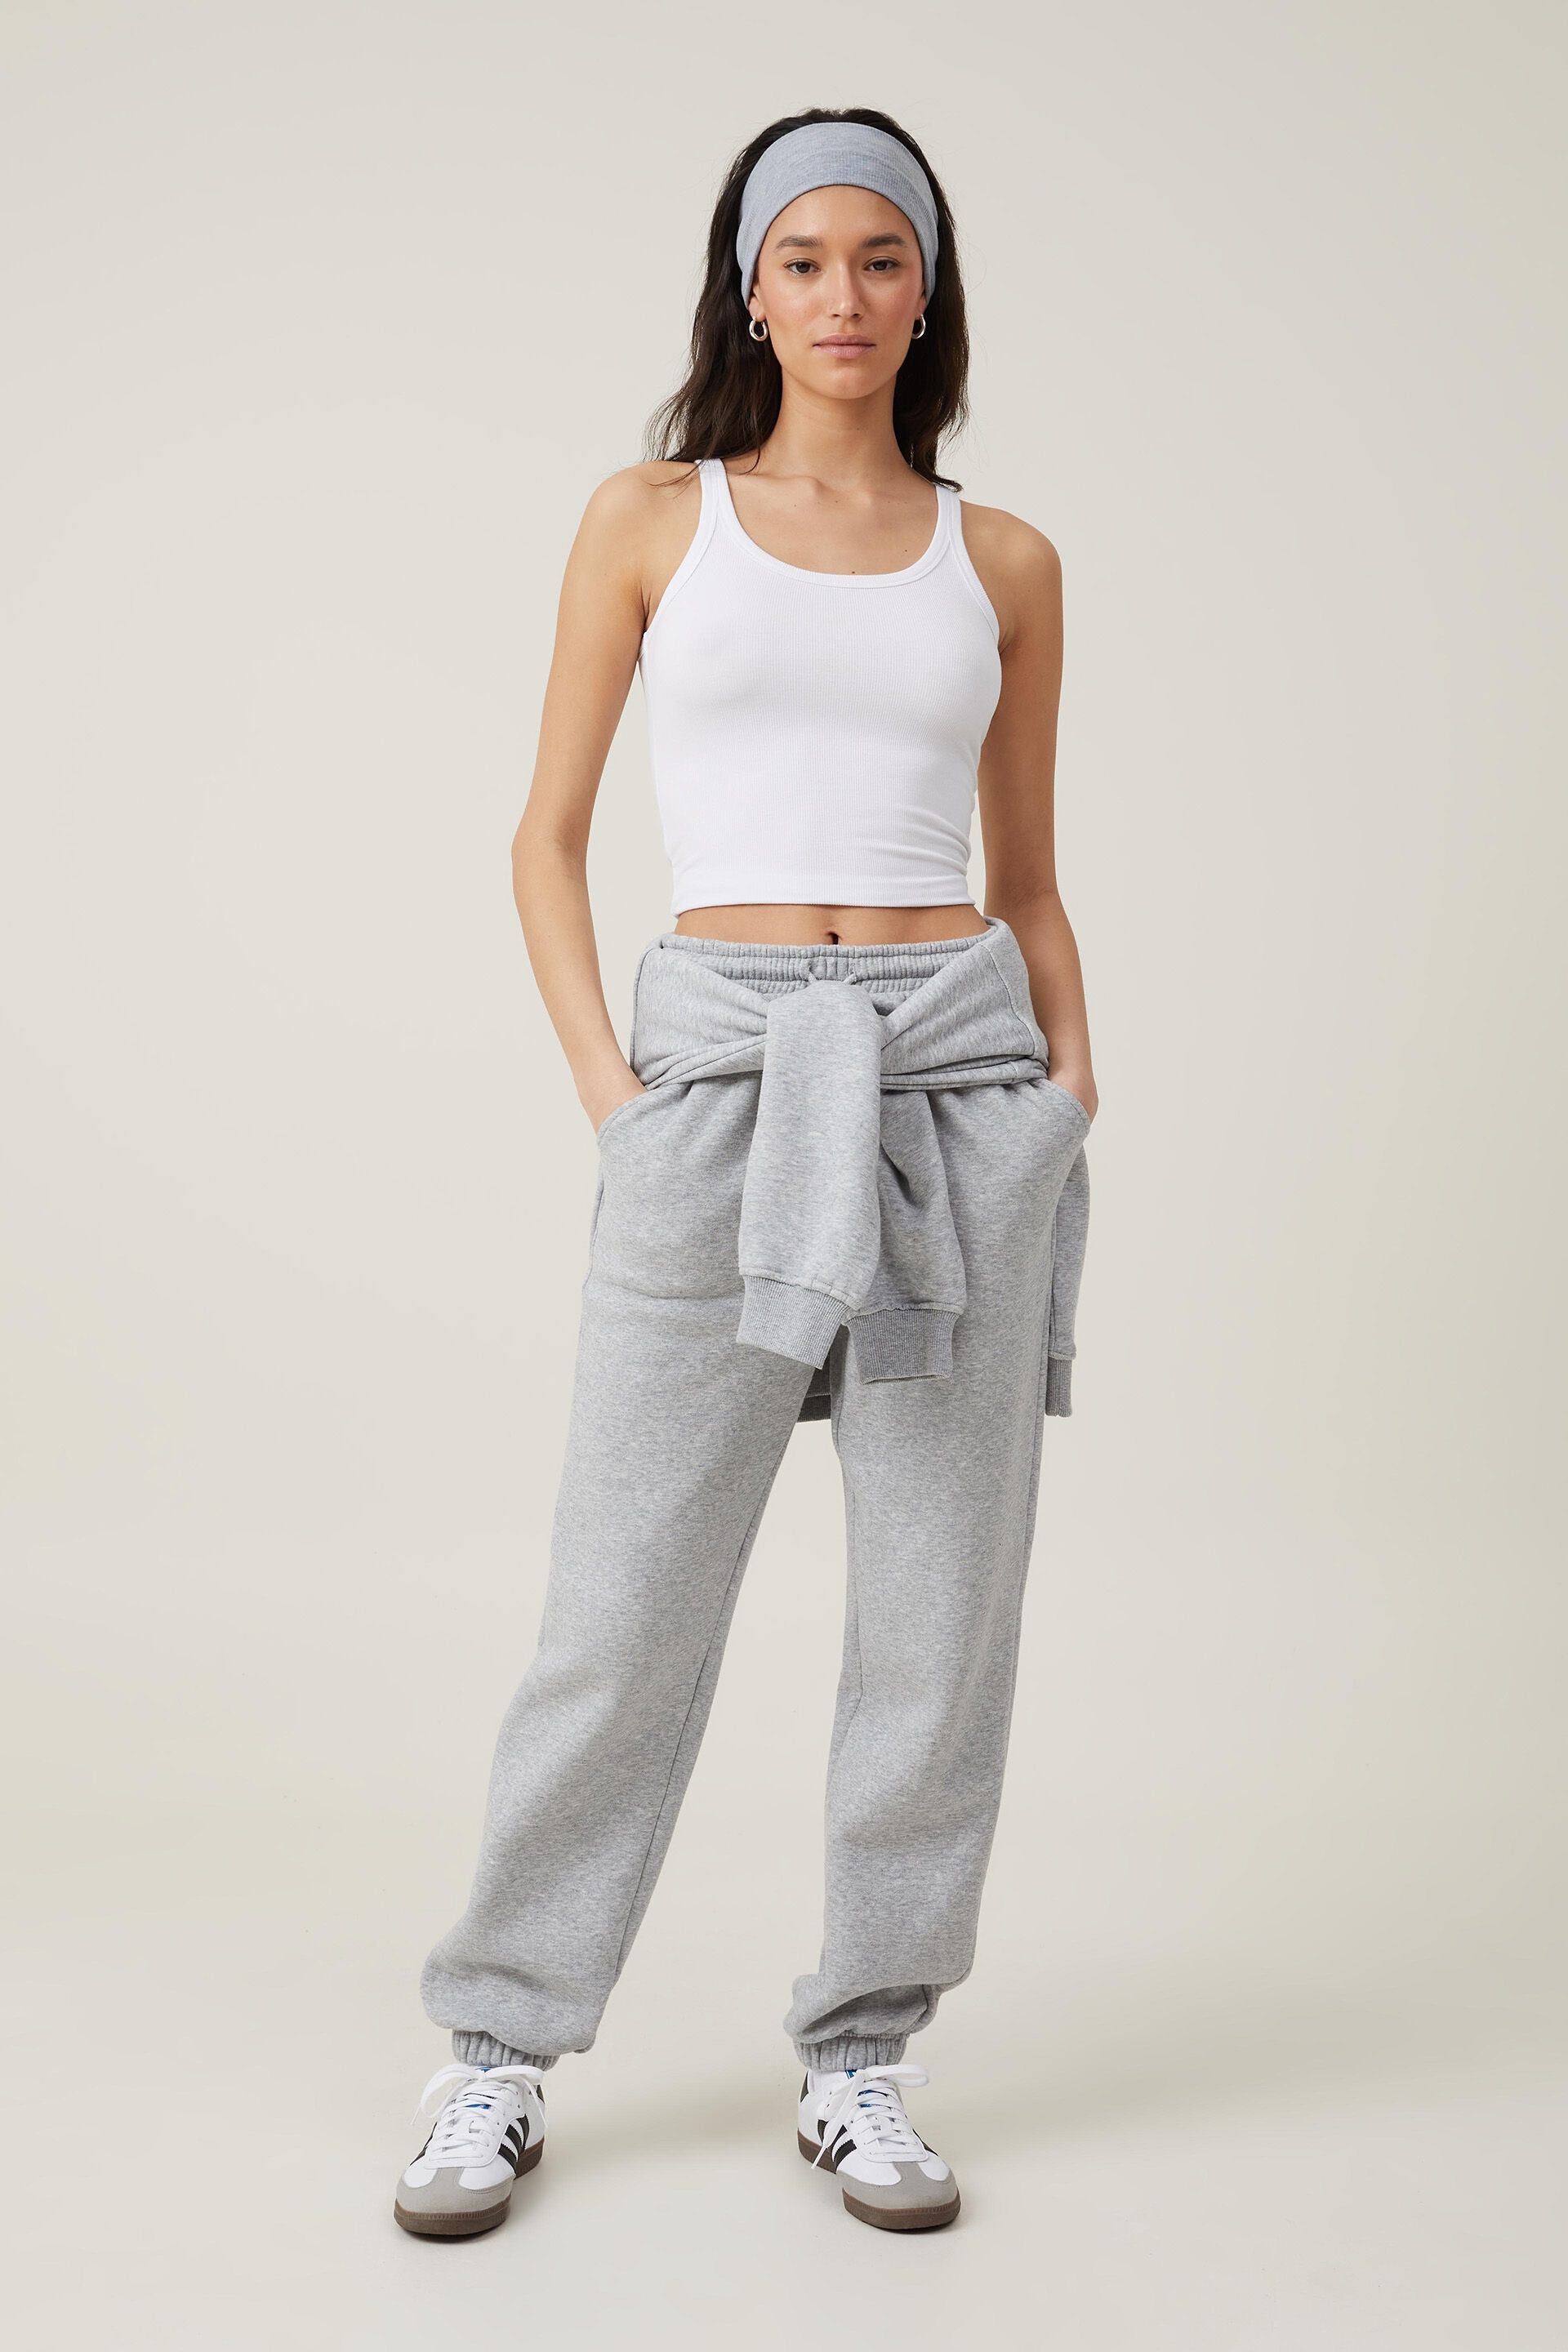 Women Casual Pants Solid Color Drawstring Elastic-Waist Long Trousers with  Pockets Jogging Sweatpants Yoga Pants - Walmart.com